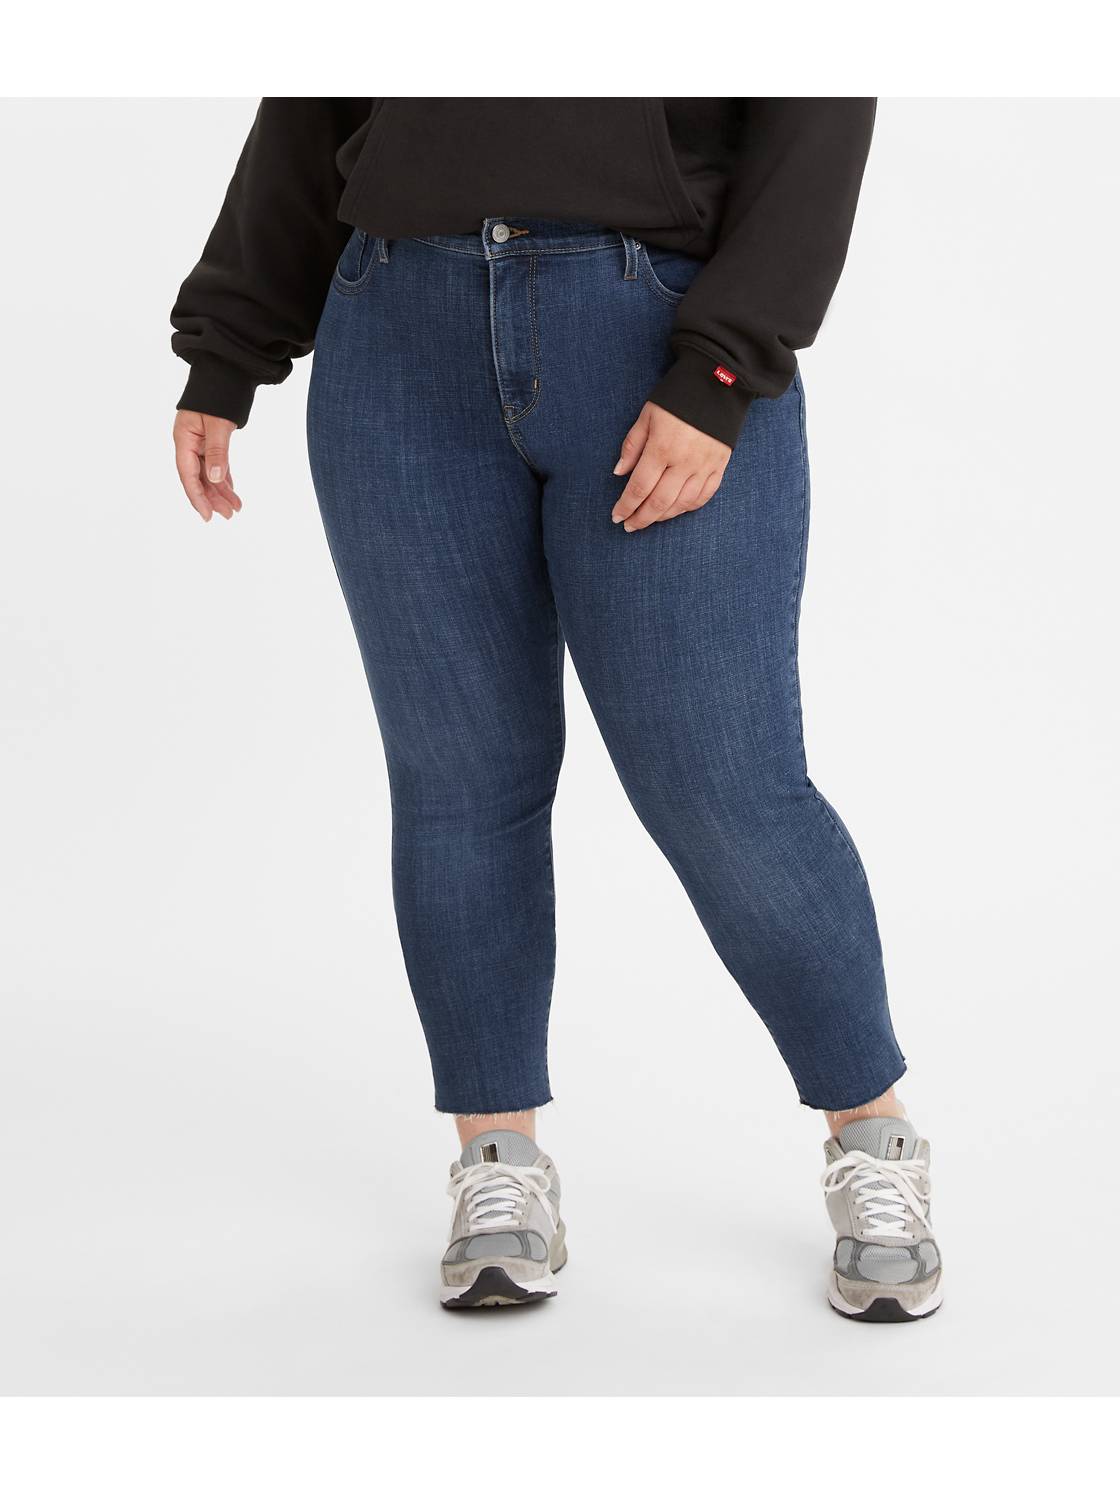 Plus Size Skinny Jeans Pant Fits Women | Levi's®